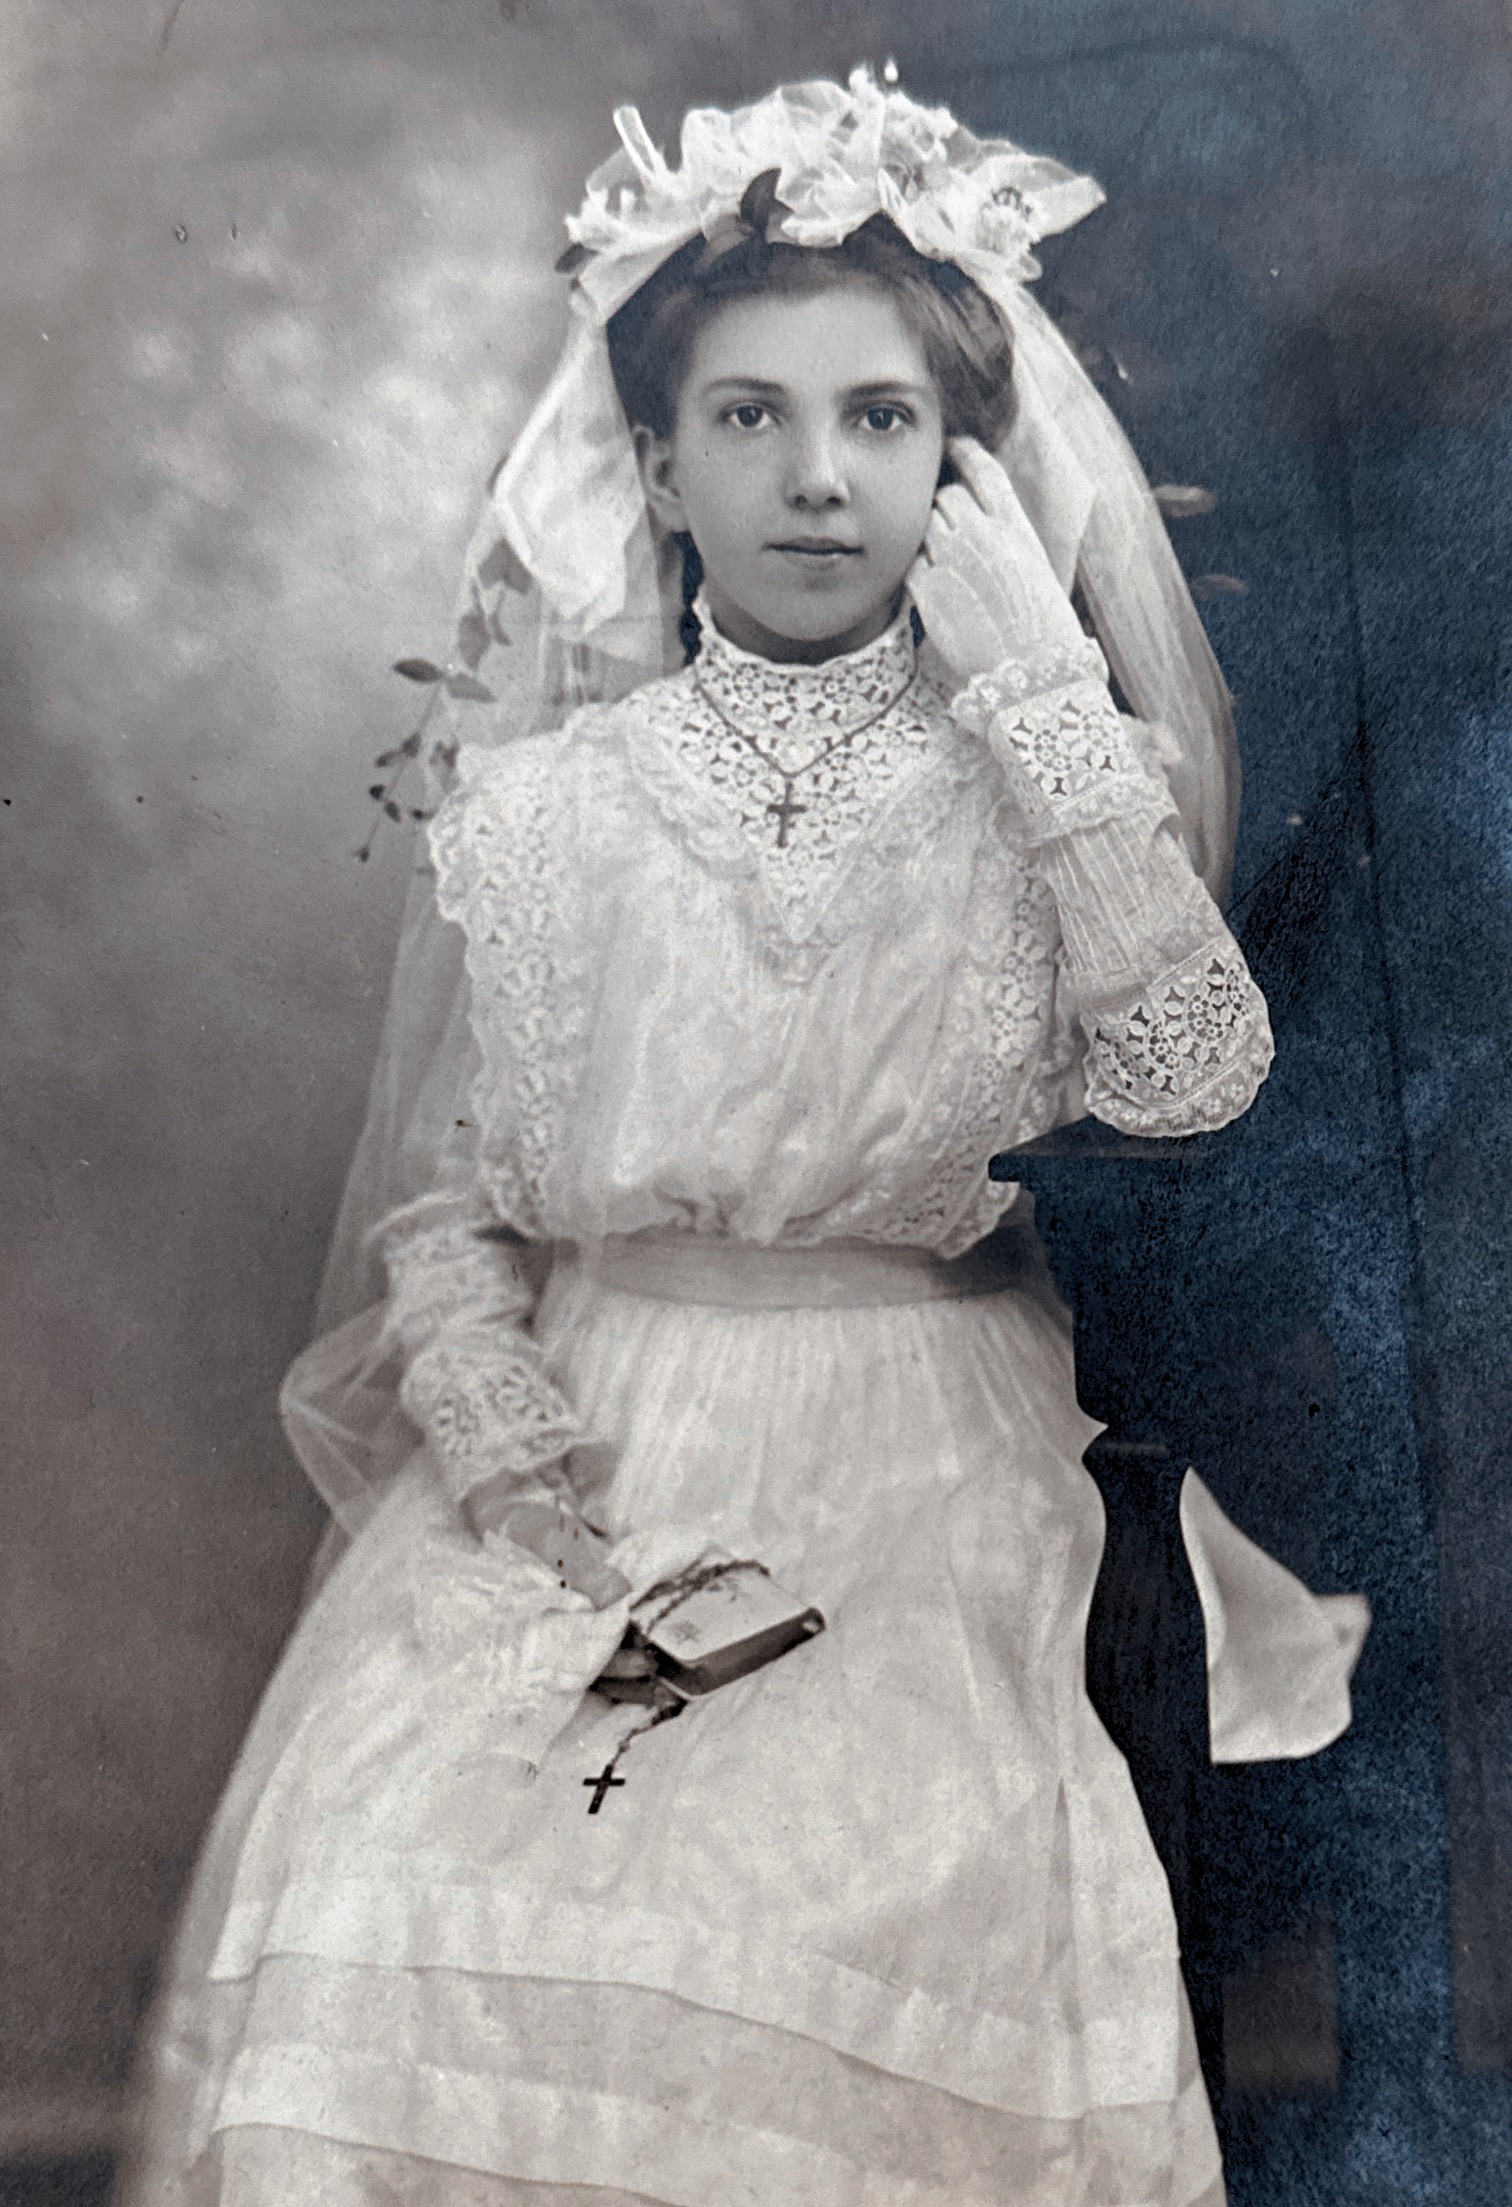 Maria Fitz May 29, 1910